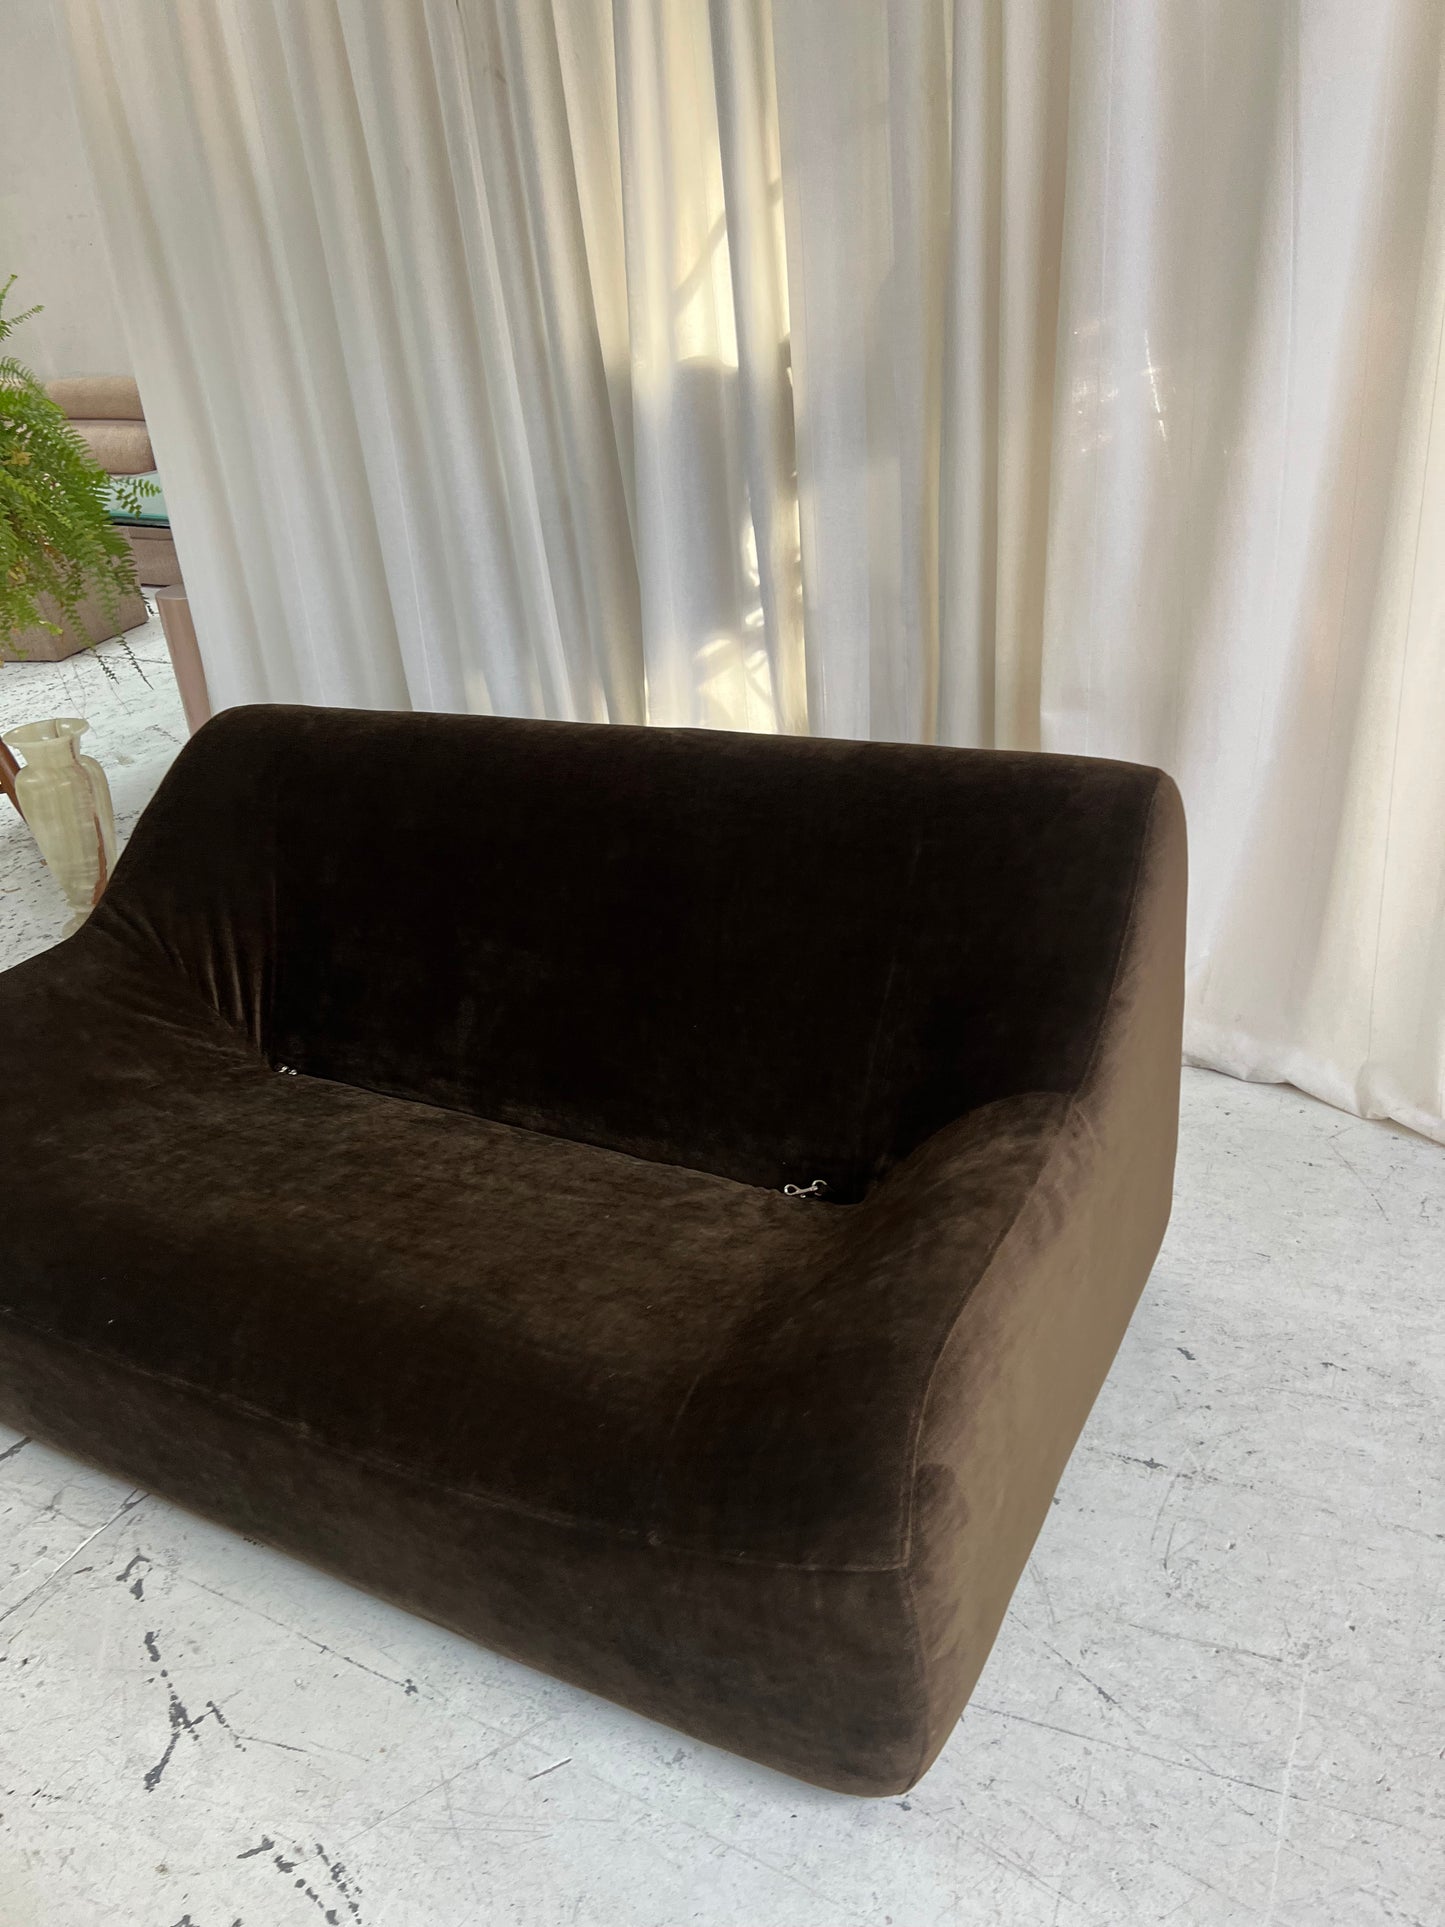 Restored Vintage Chocolate Velvet Sofa